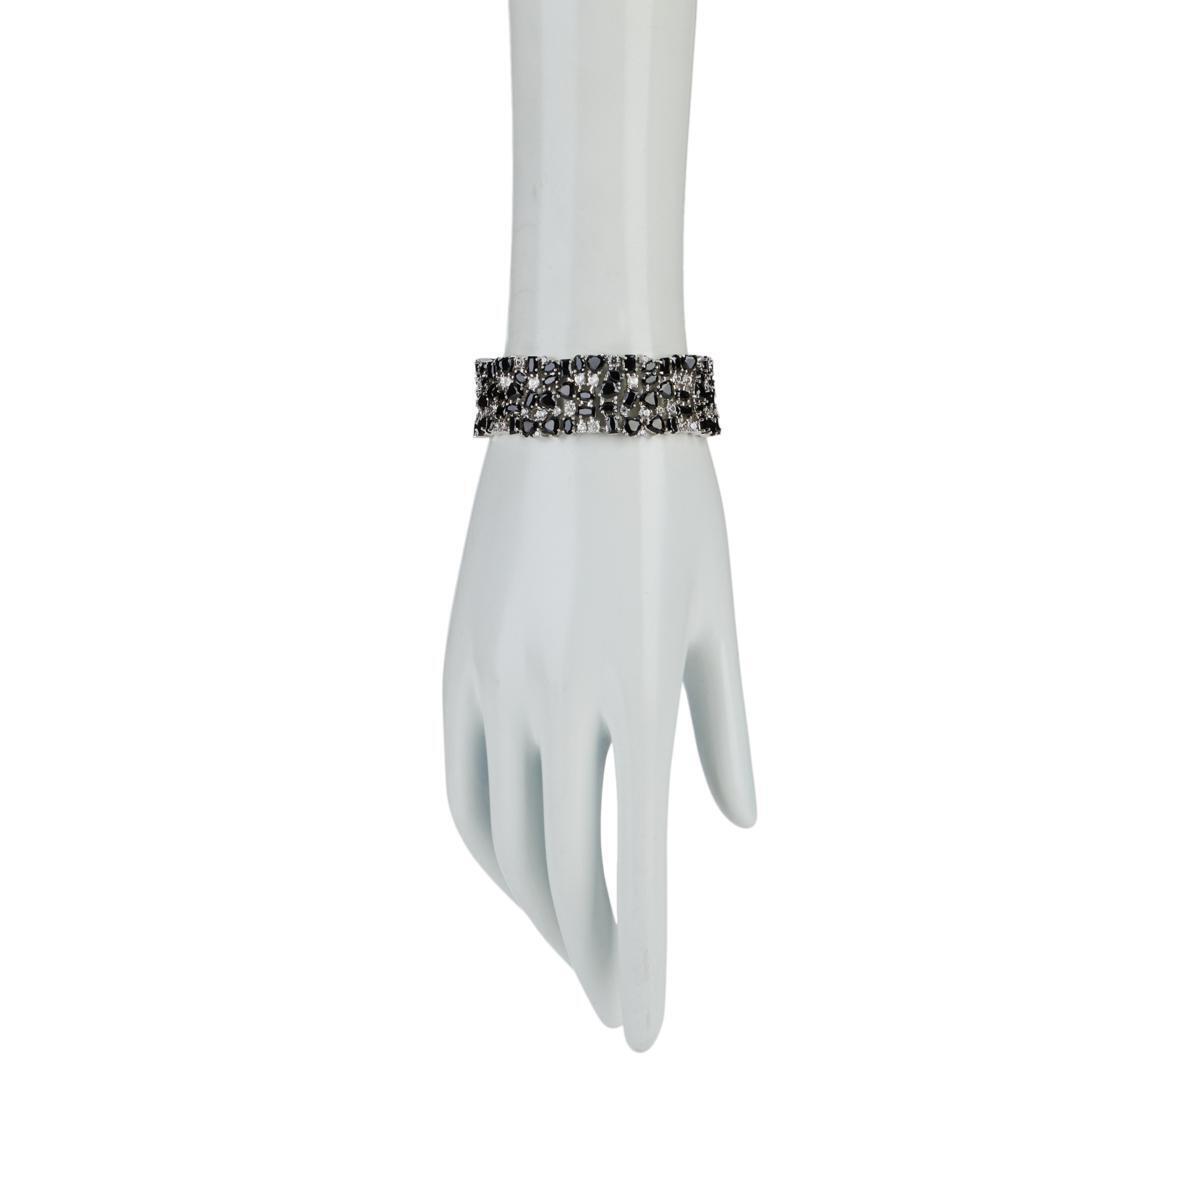 Colleen Lopez Black Spinel & White Zircon Bracelet. 8"